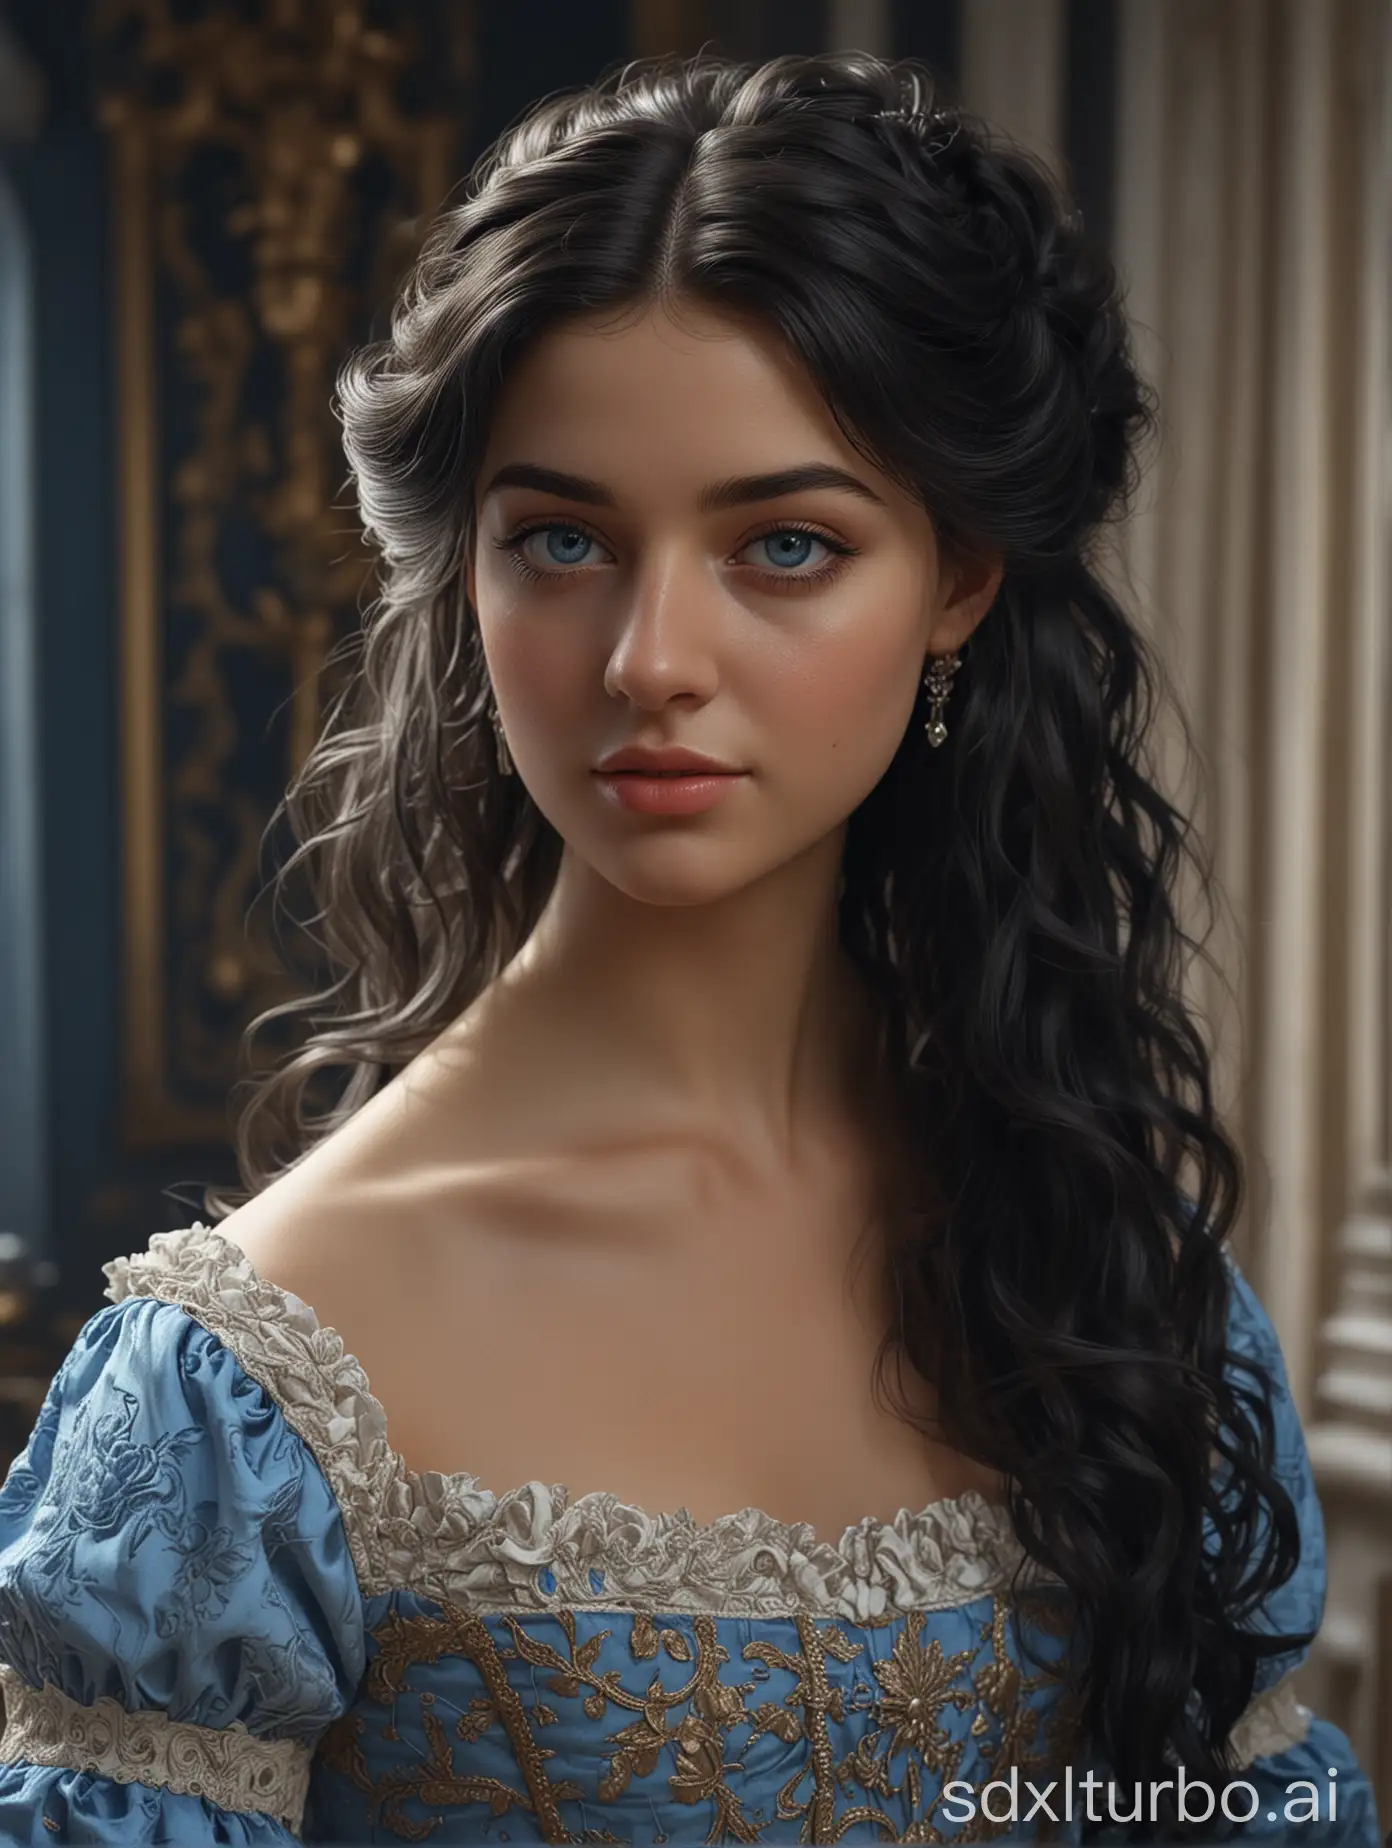 Stunning-Louis-XIV-Era-Inspired-Portrait-of-a-23YearOld-Woman